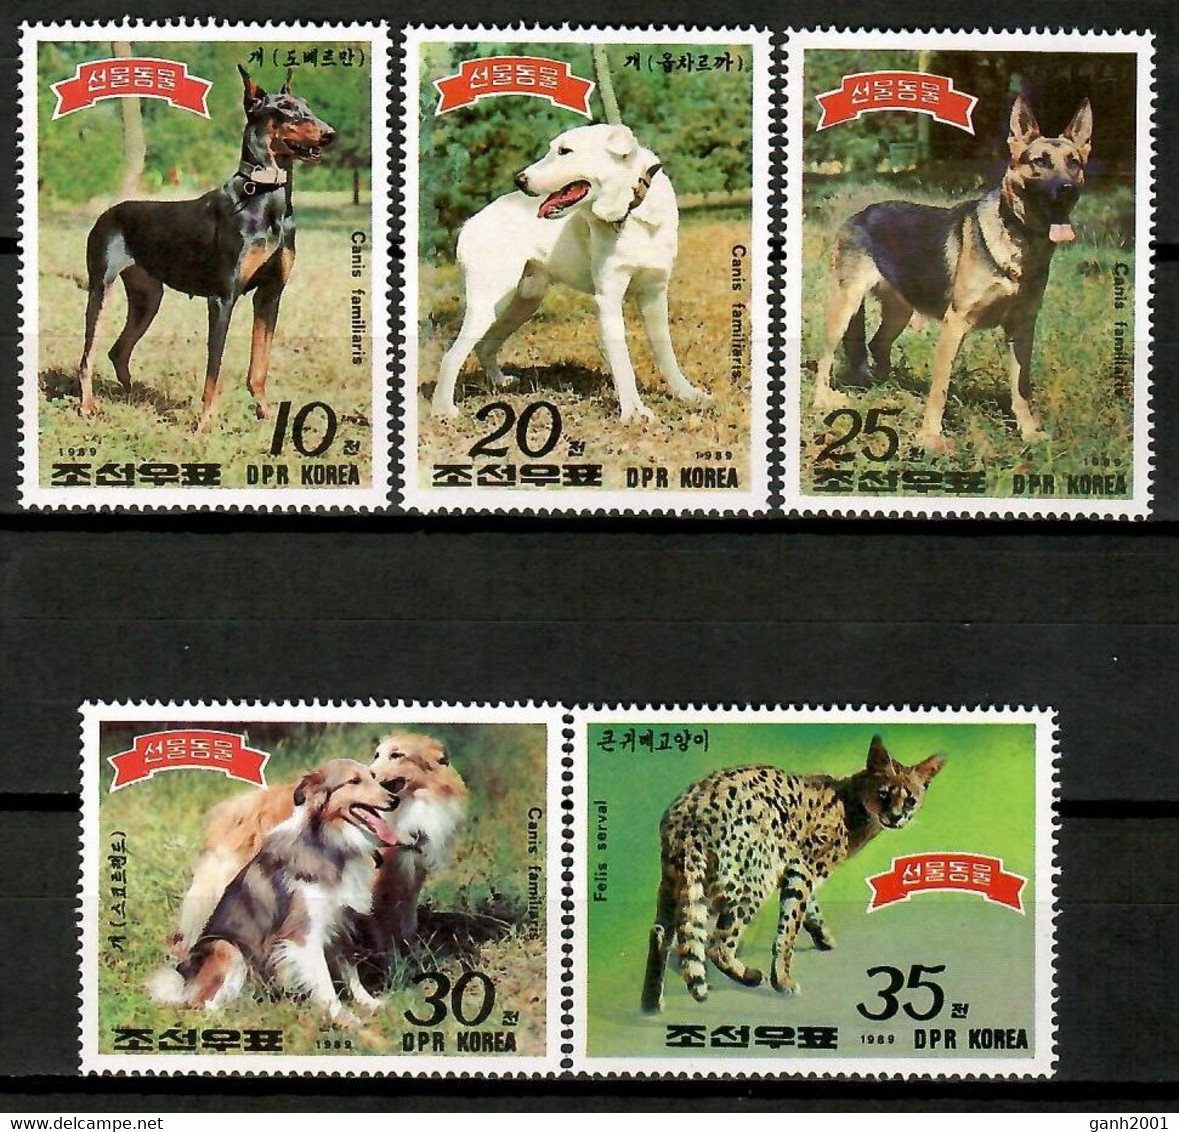 Korea N. 1989 Corea / Mammals Dogs MNH Perros Hunde Chiens / Ht50  18-11 - Dogs